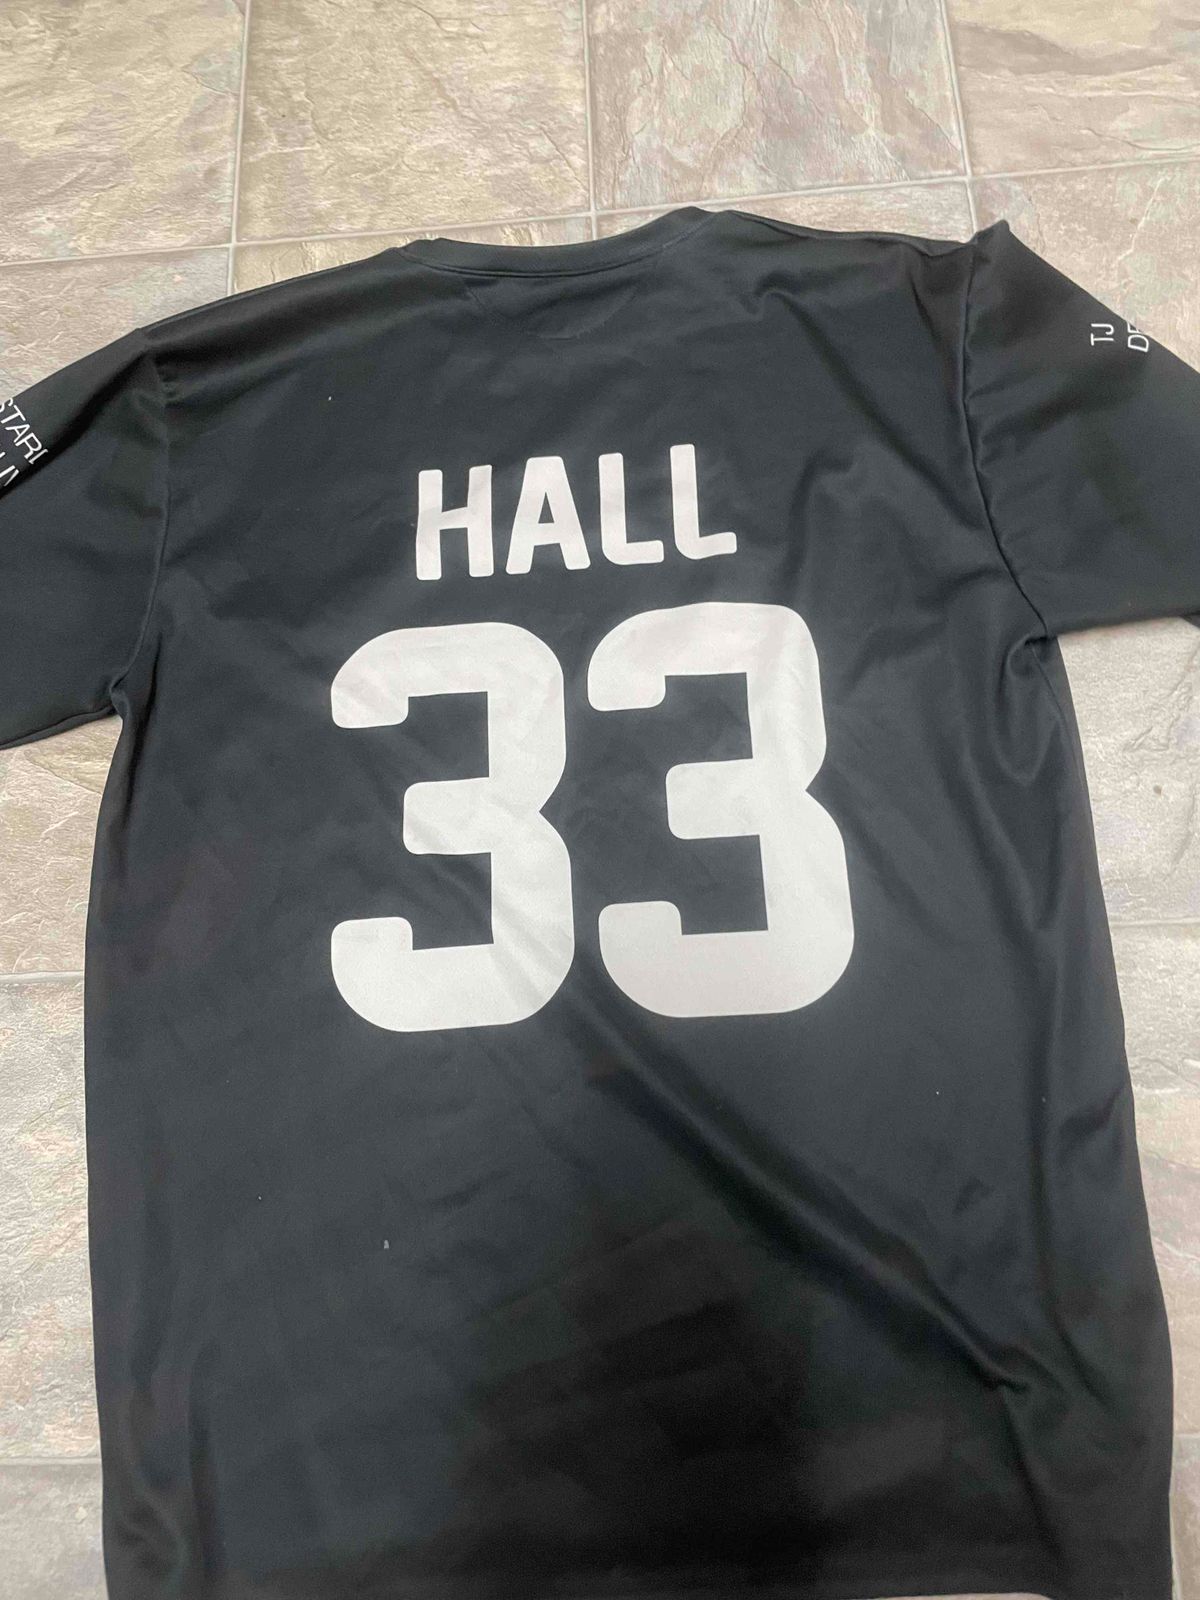 Corey Hall’s TJ bstrd’s jersey